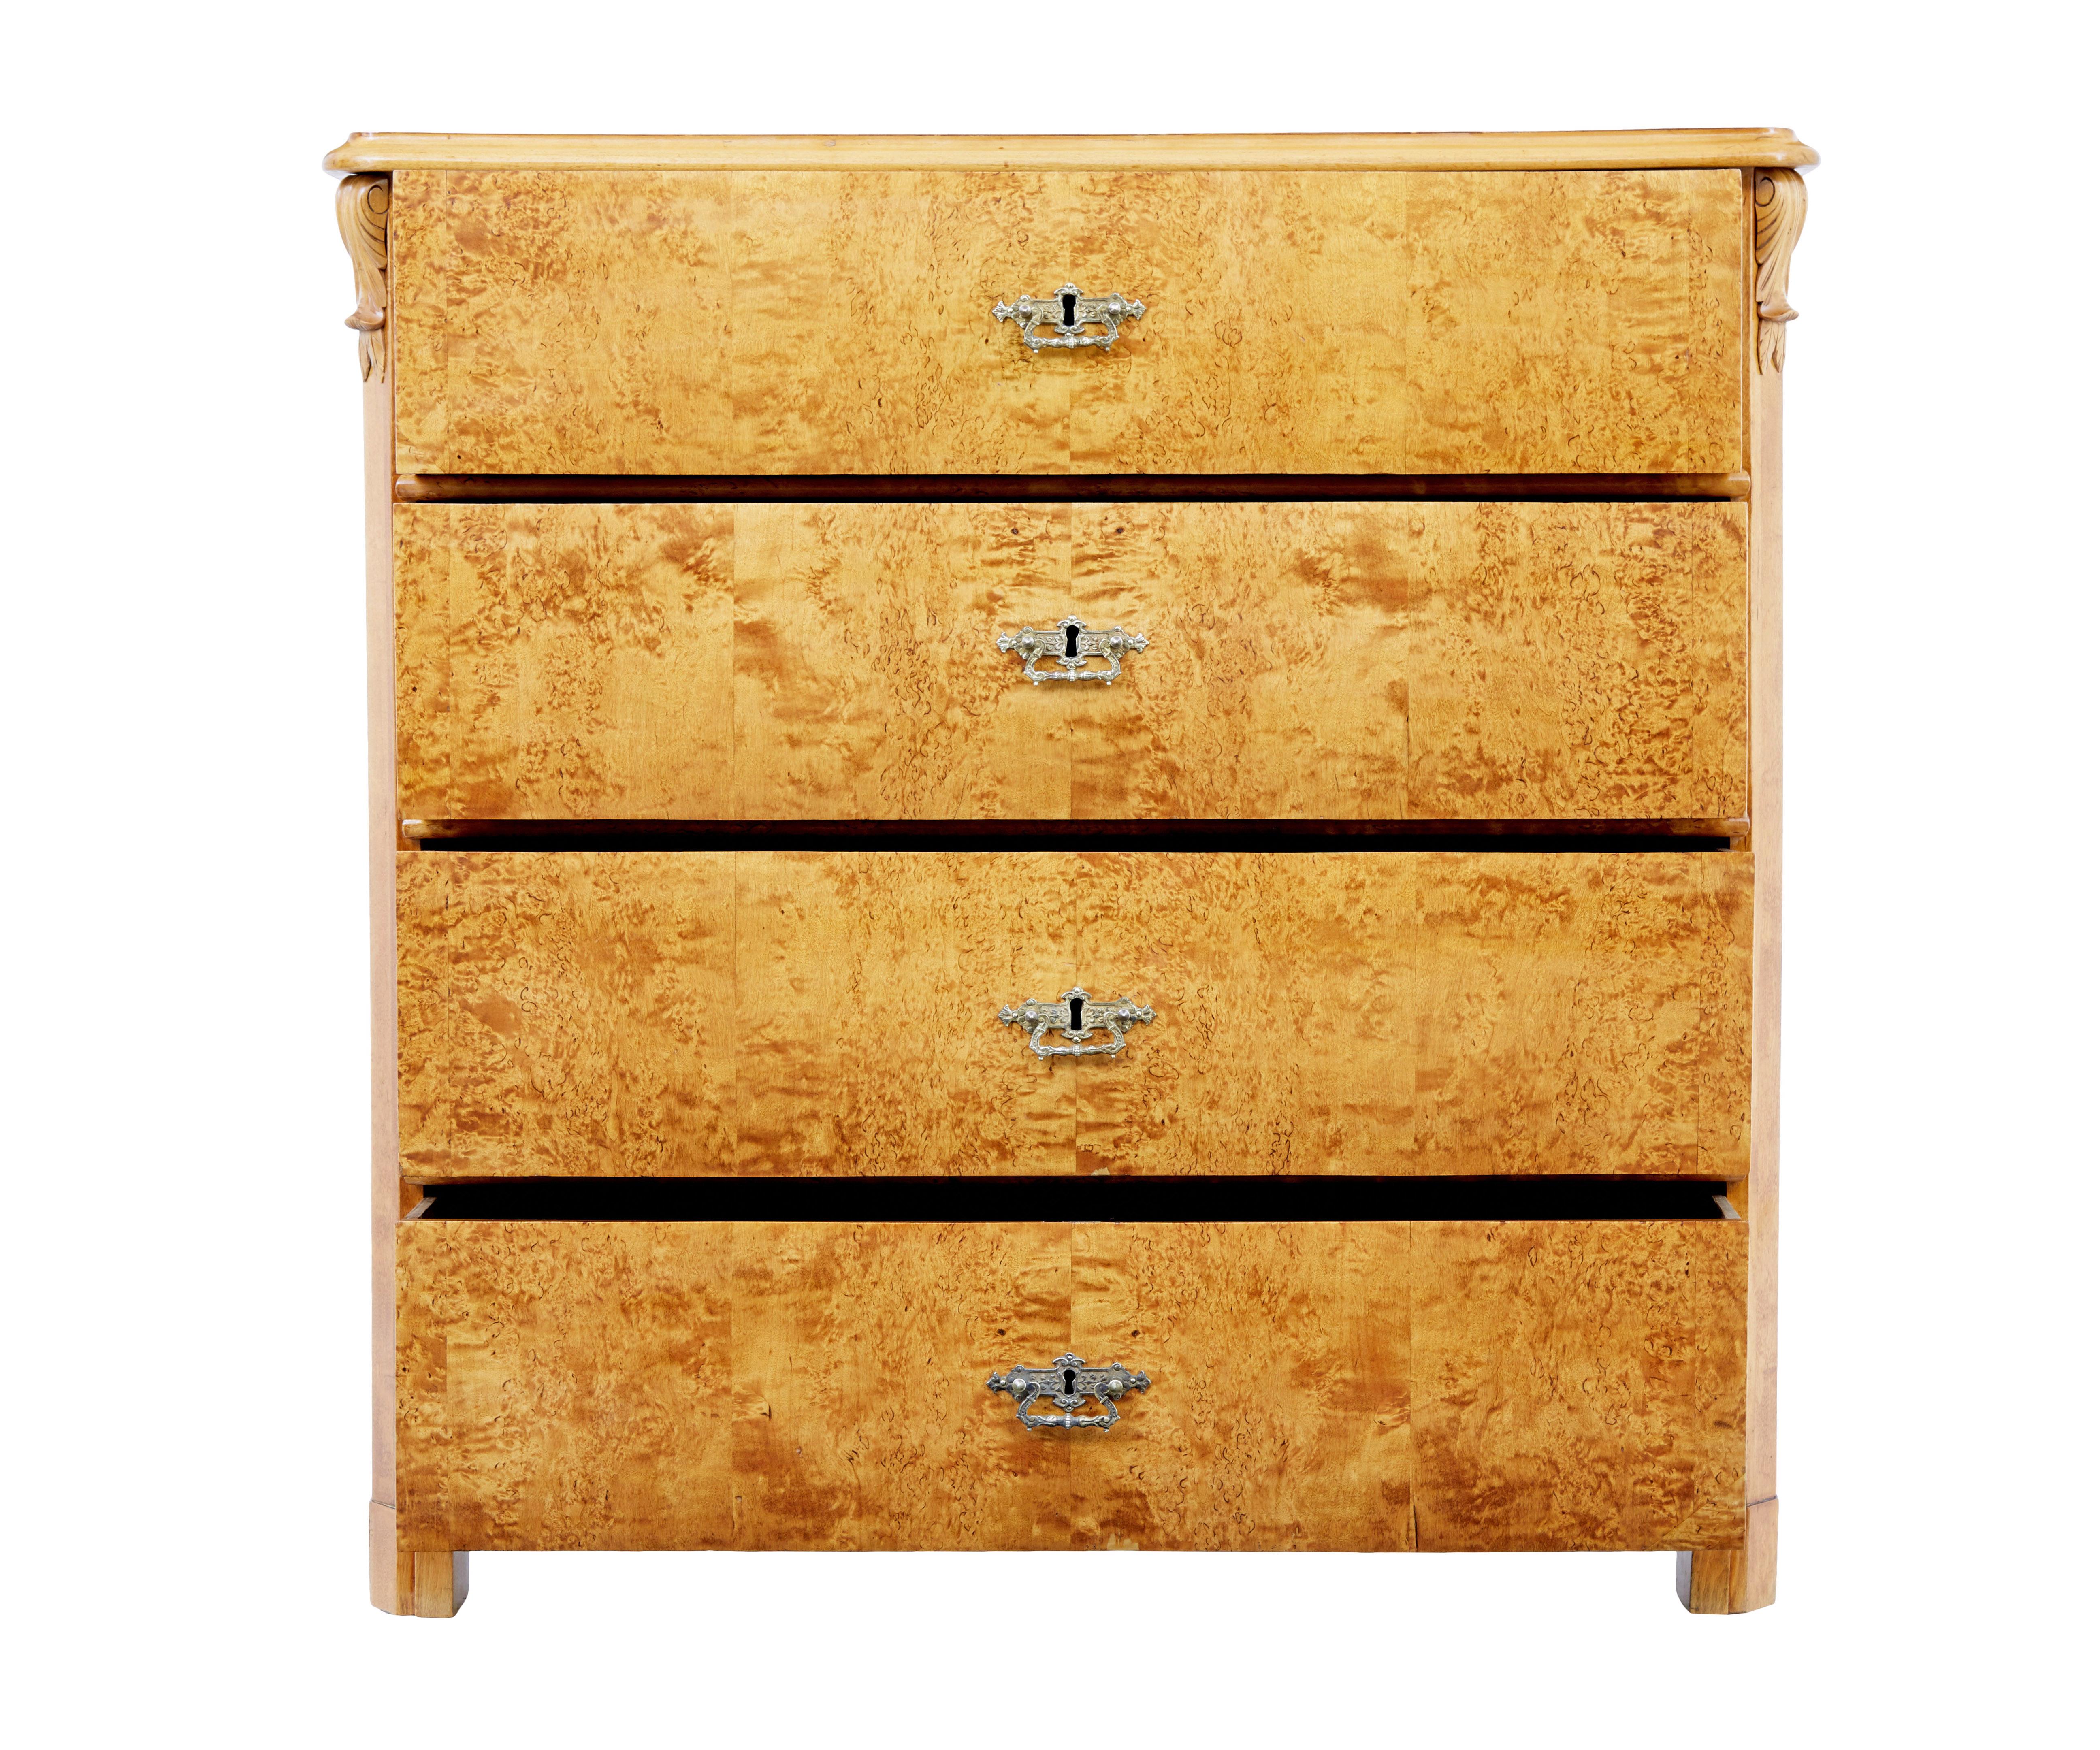 Victorian 19th century Swedish burr birch chest of drawers